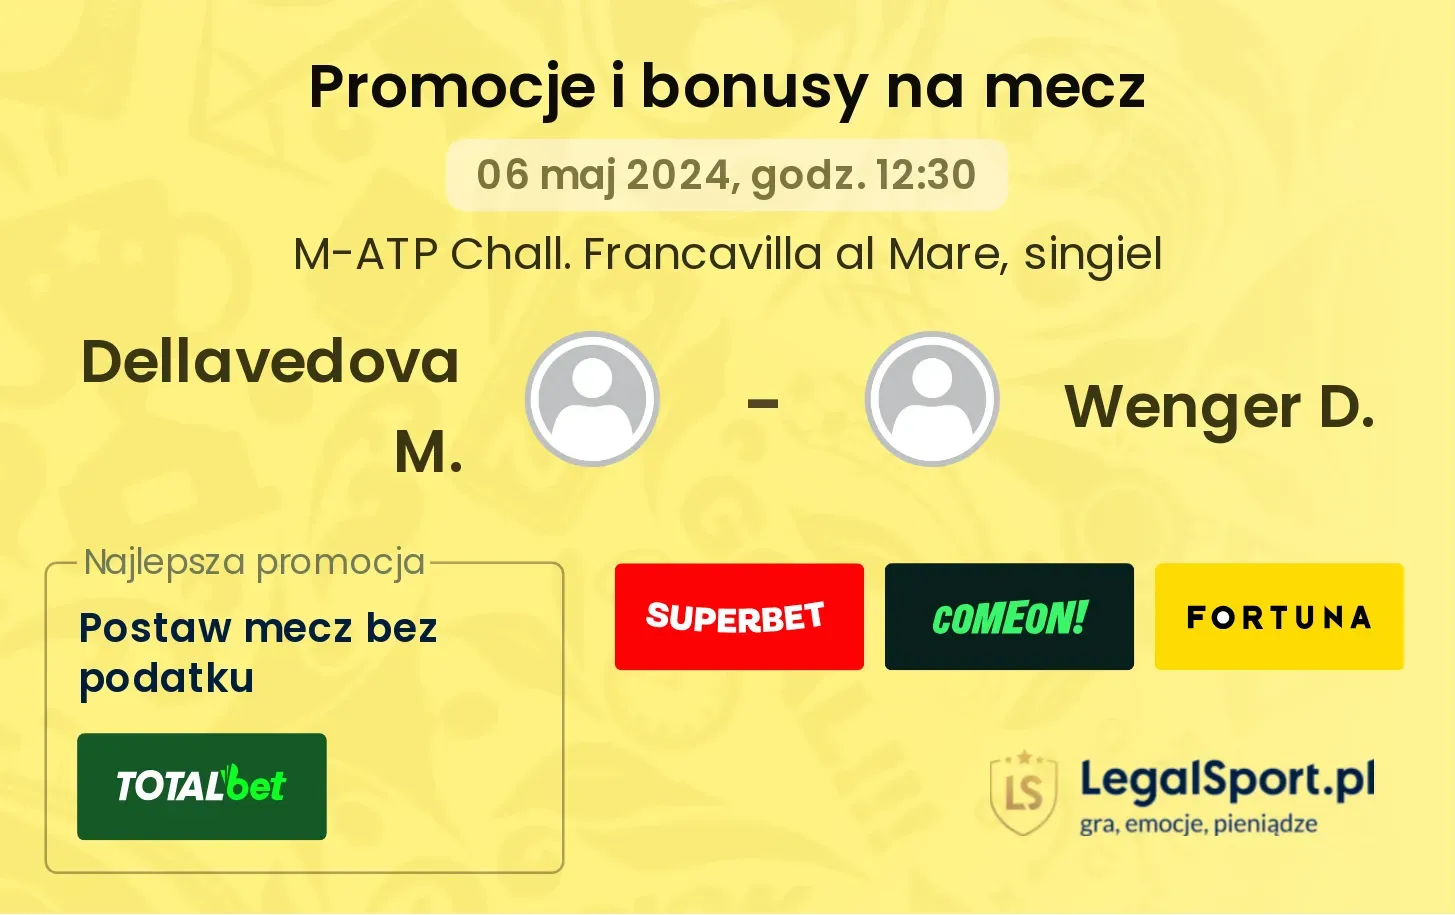 Dellavedova M. - Wenger D. promocje bonusy na mecz